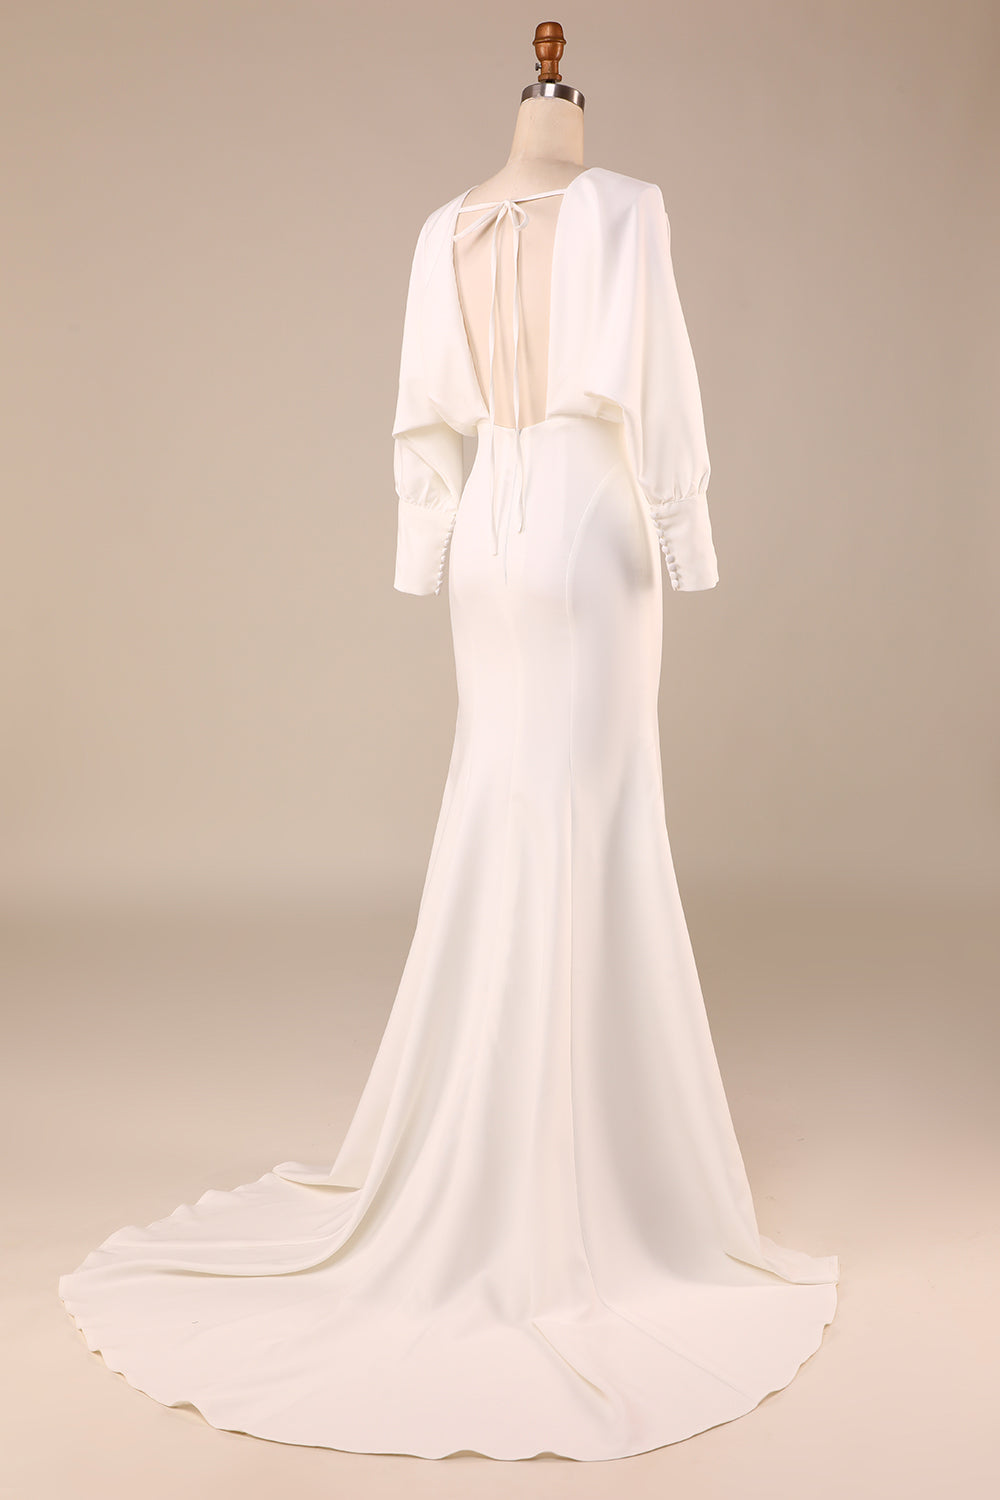 Ivory Mermaid V Neck Sweep Train Wedding Dress with Long Sleeves